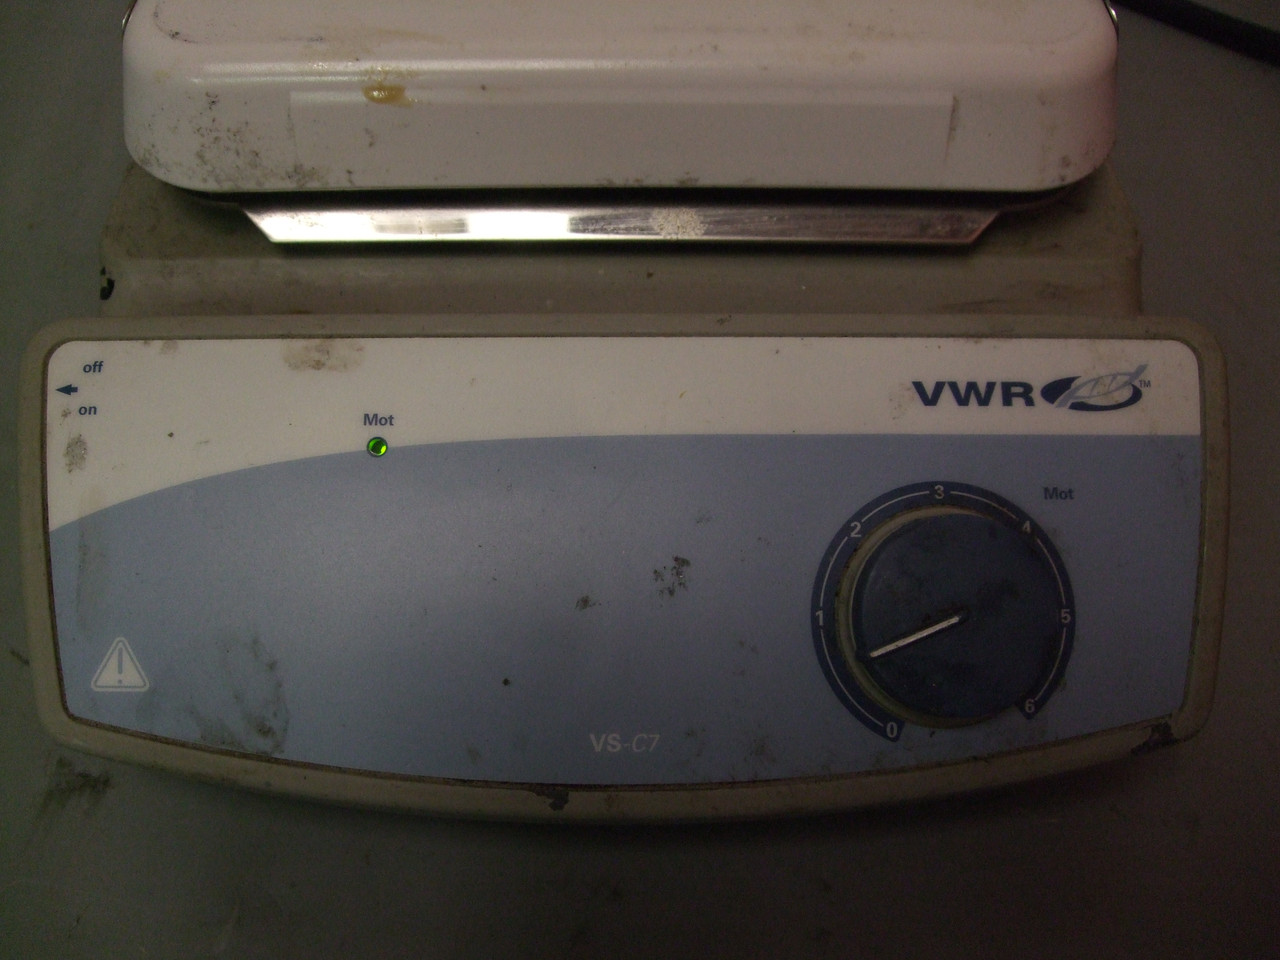 VWR Model VS-C7 S1 Magnetic Stirrer - *Used*